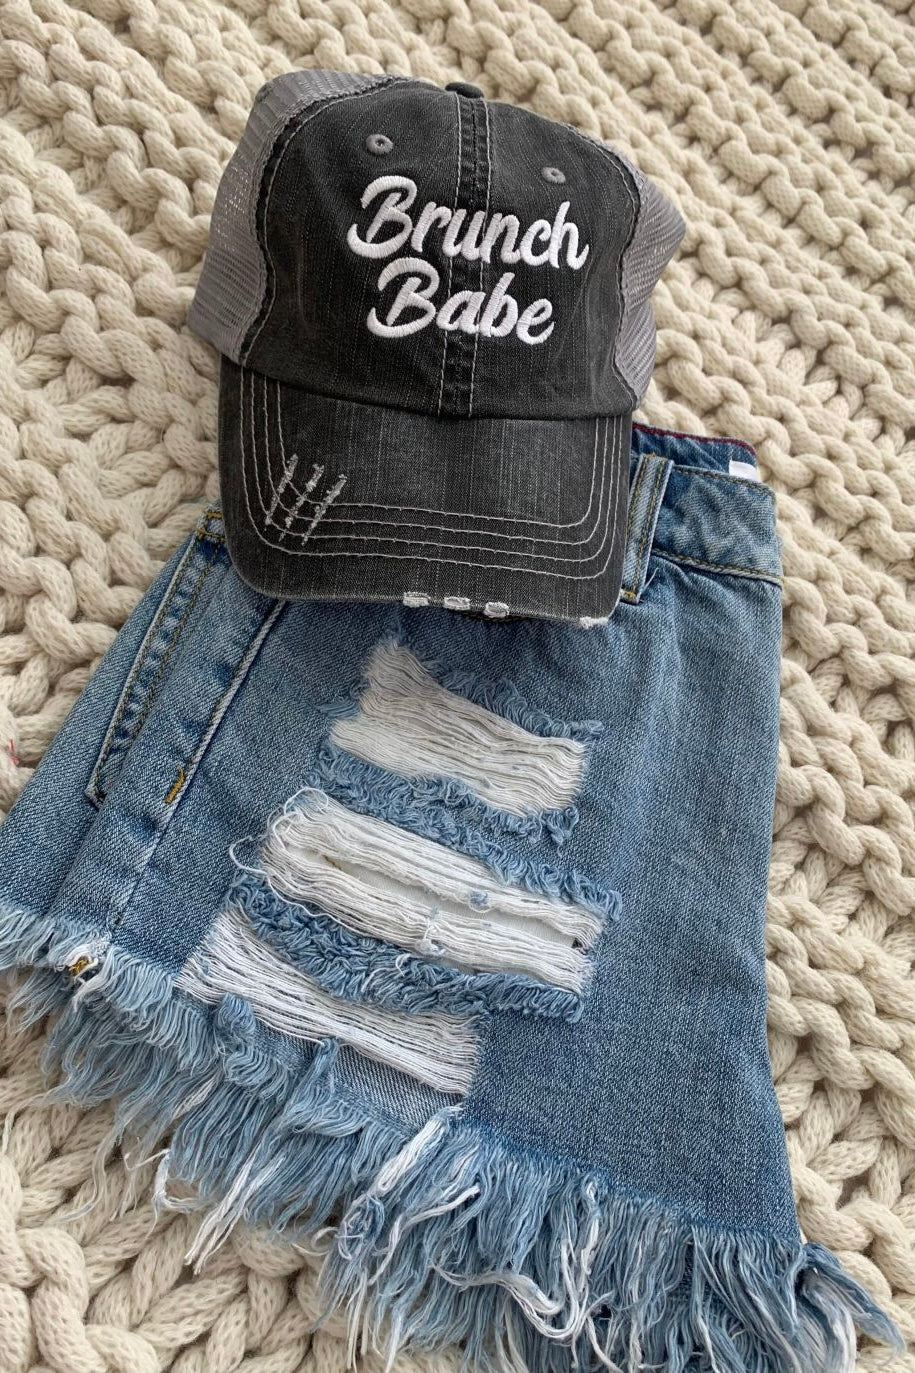 Brunch Babe Embroidered Distressed Trucker Hat